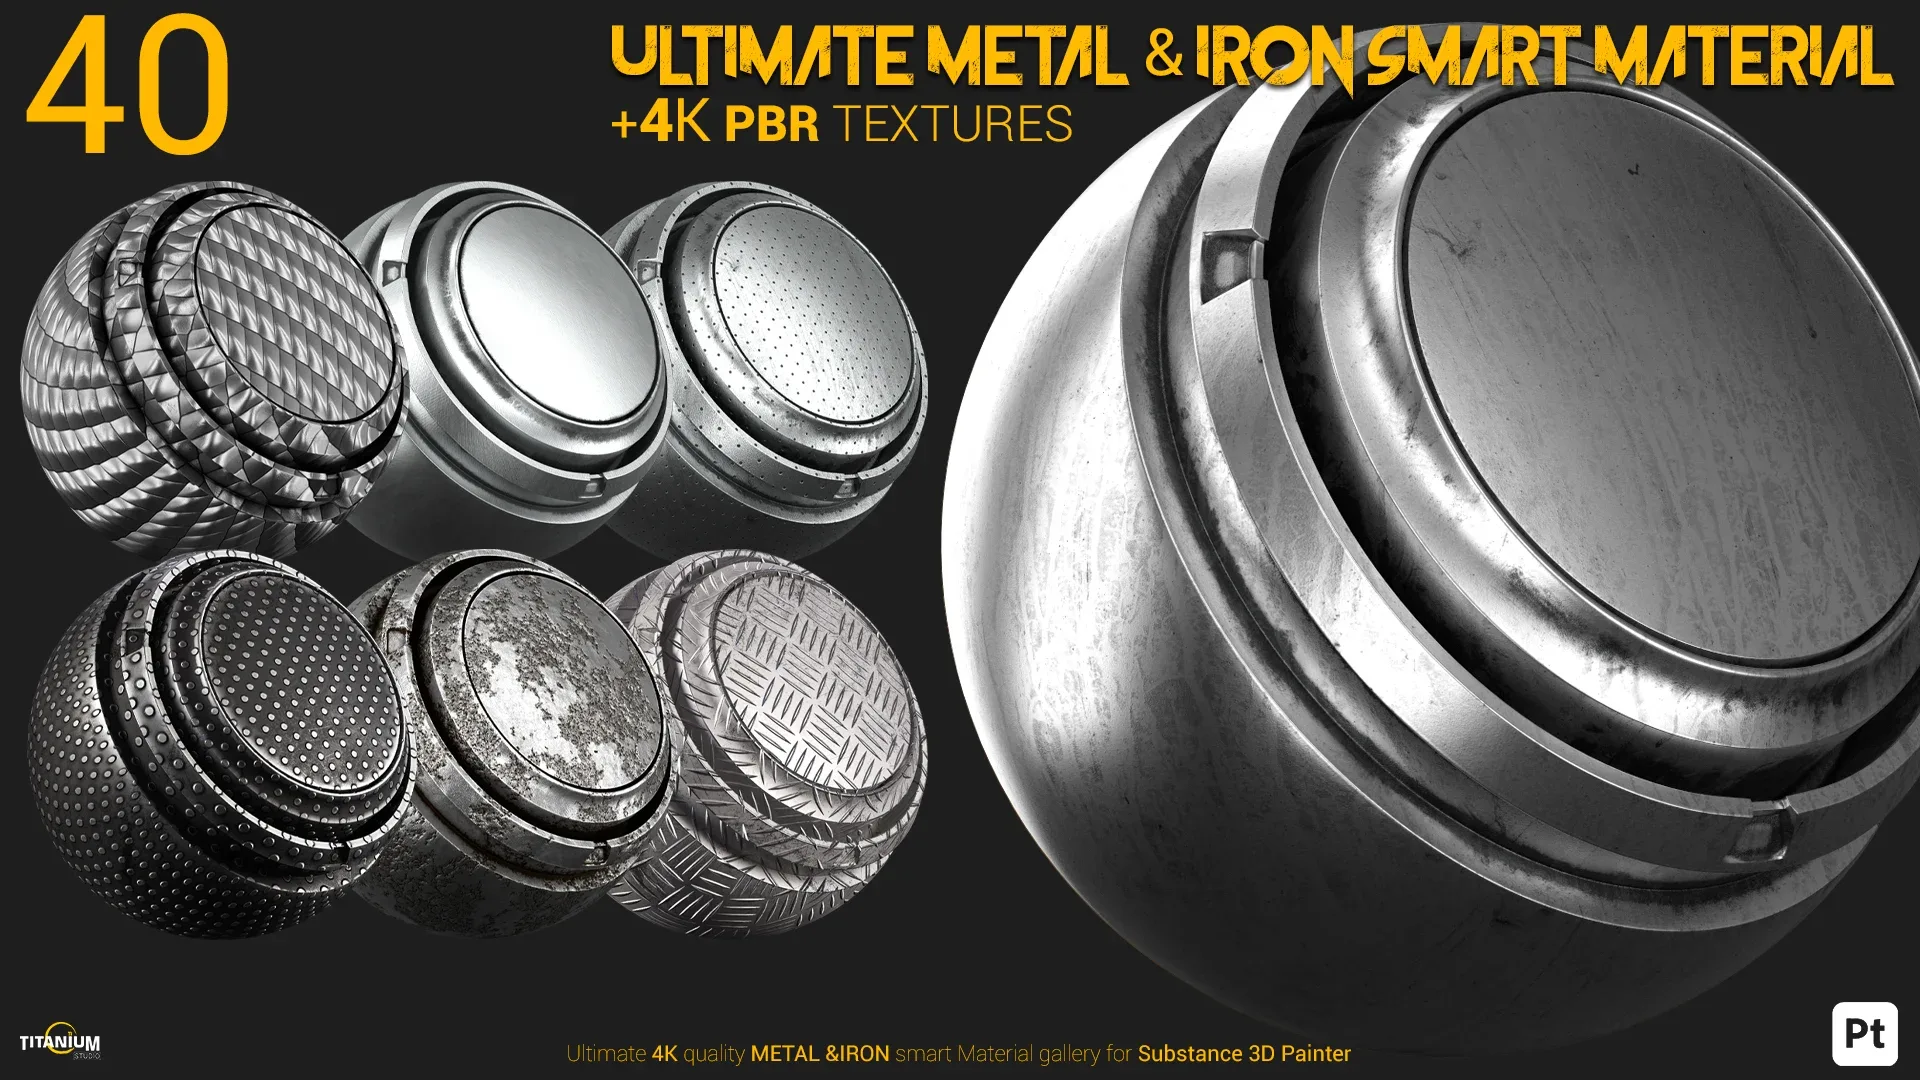 Ultimate Metal & Iron Smart Material + 4K PBR Textures